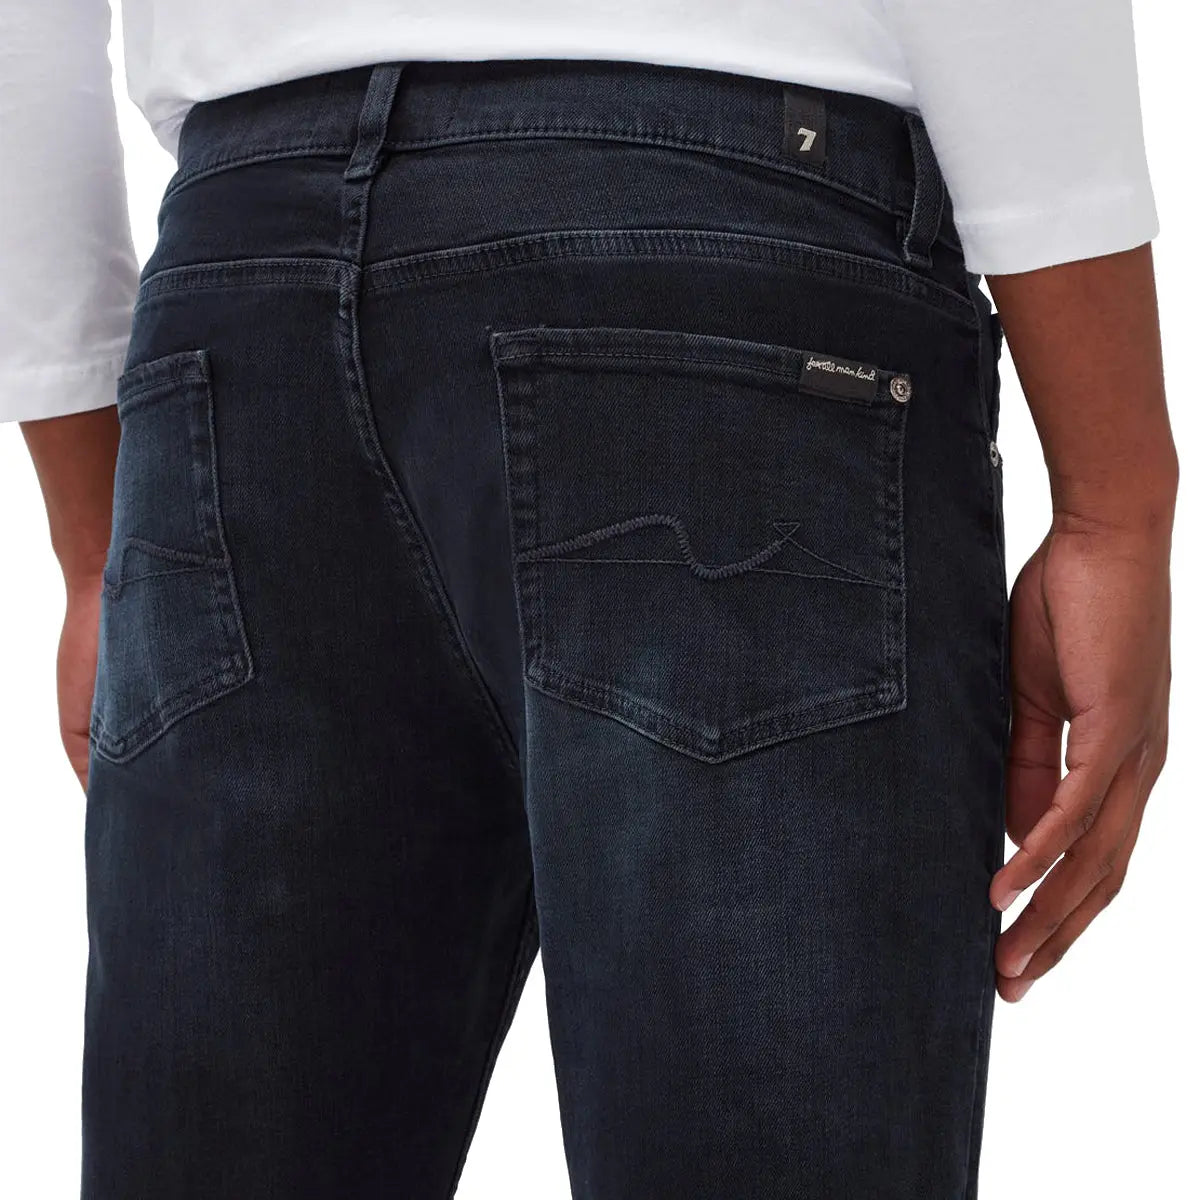 Black Slimmy Tapered Stretch Tek Principle Jeans  7 For All Mankind   